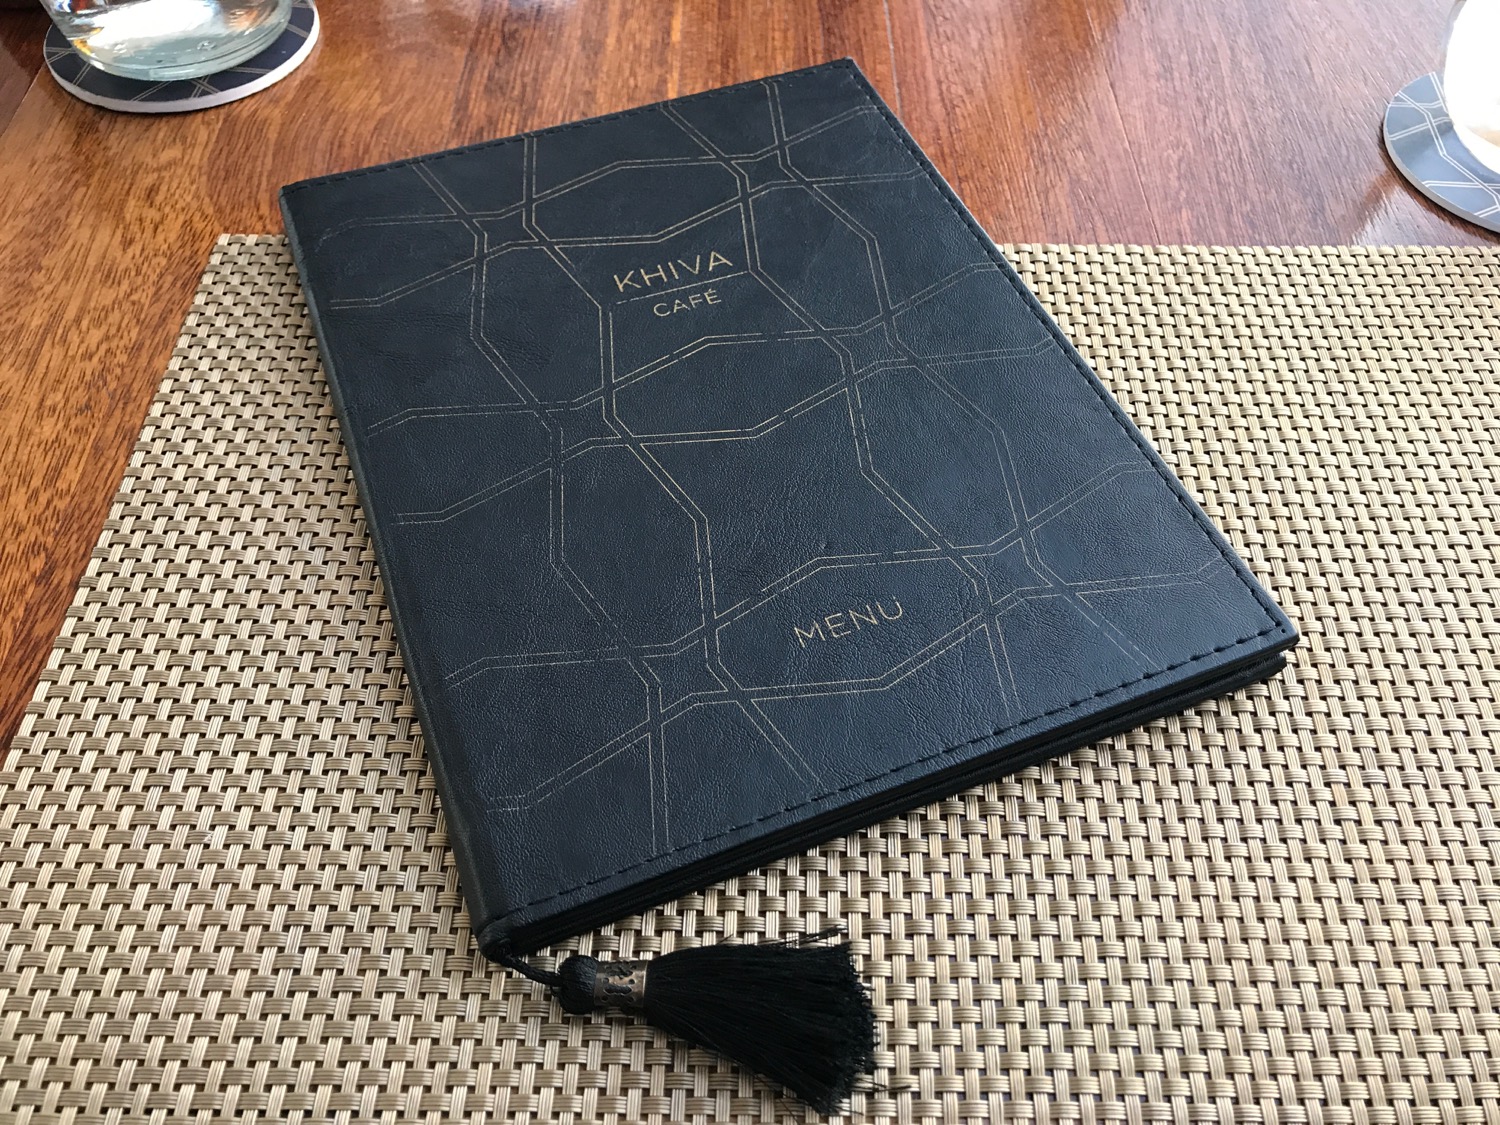 a black menu book on a table